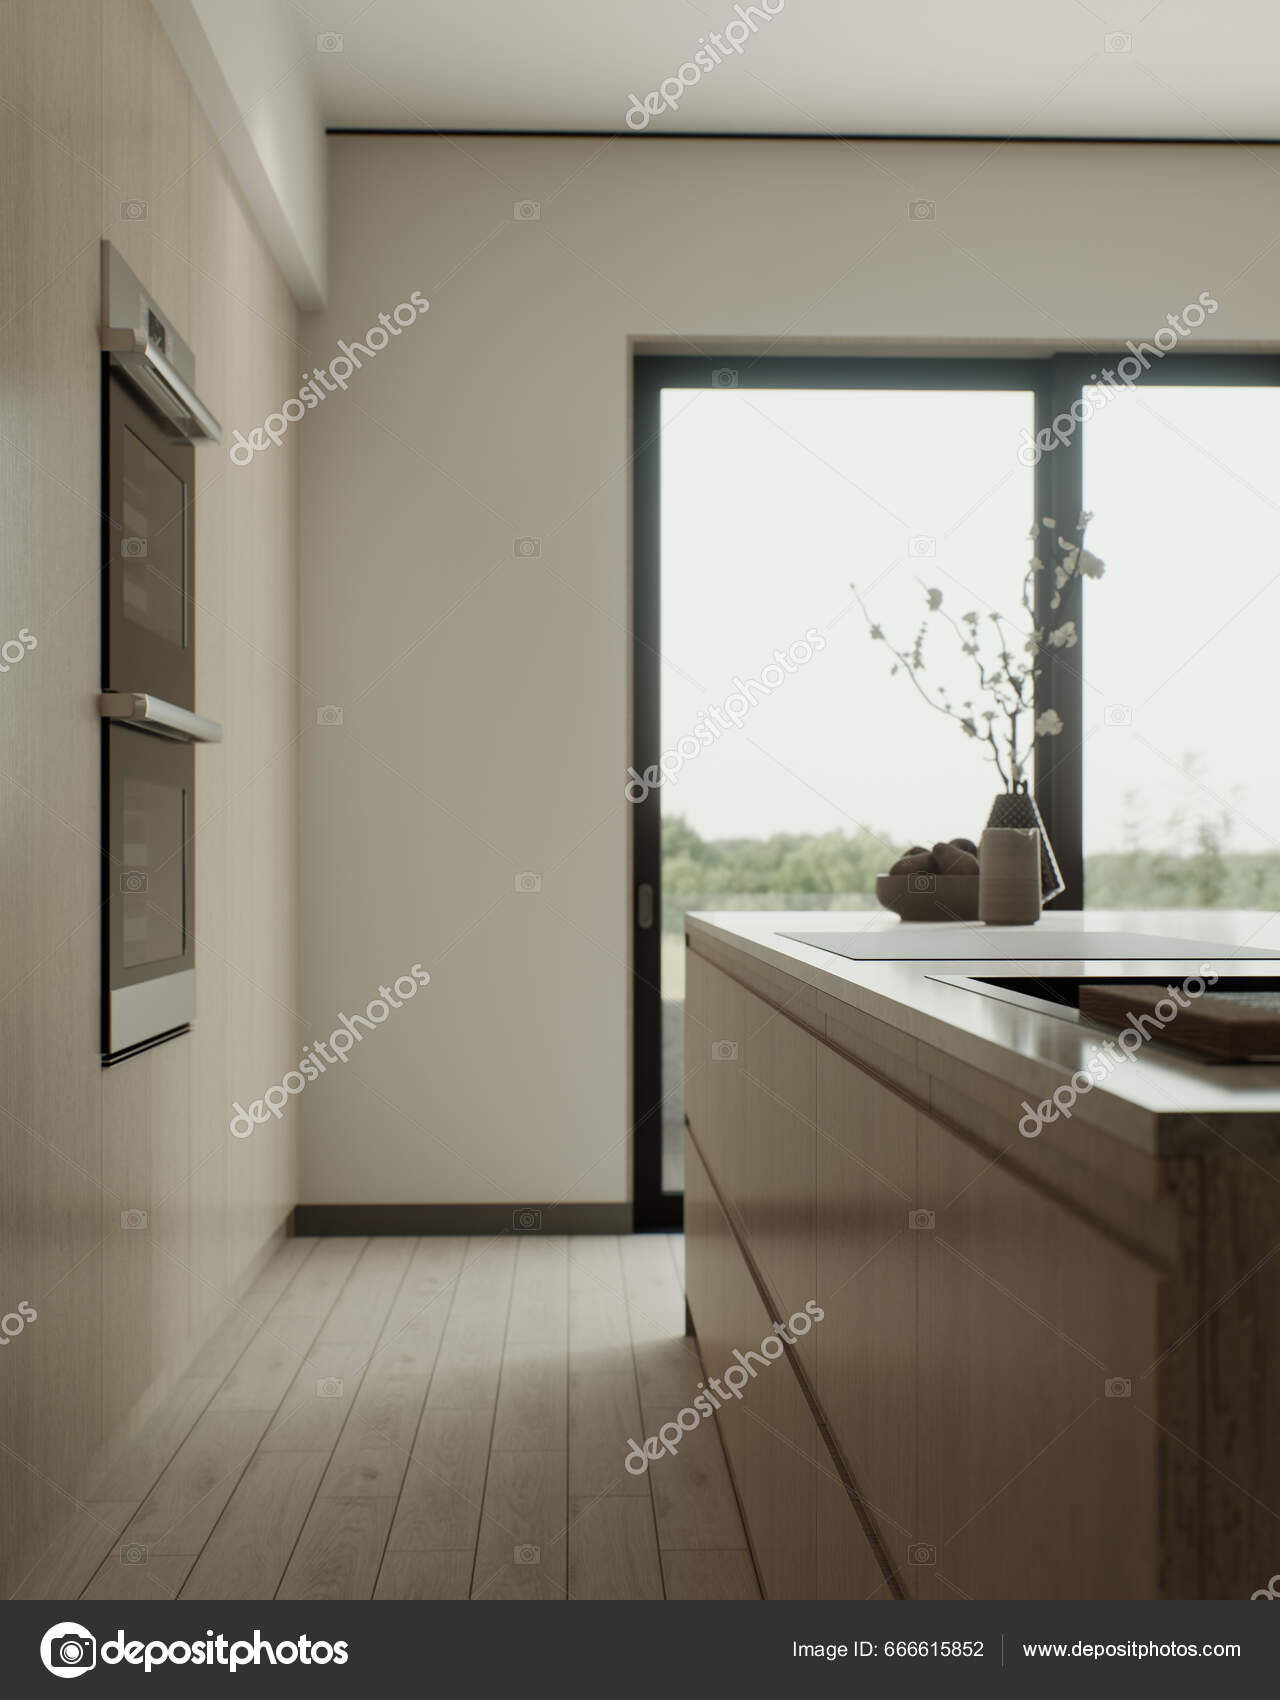 Warm Minimalist Kitchen Cabinets in Beige and Wood